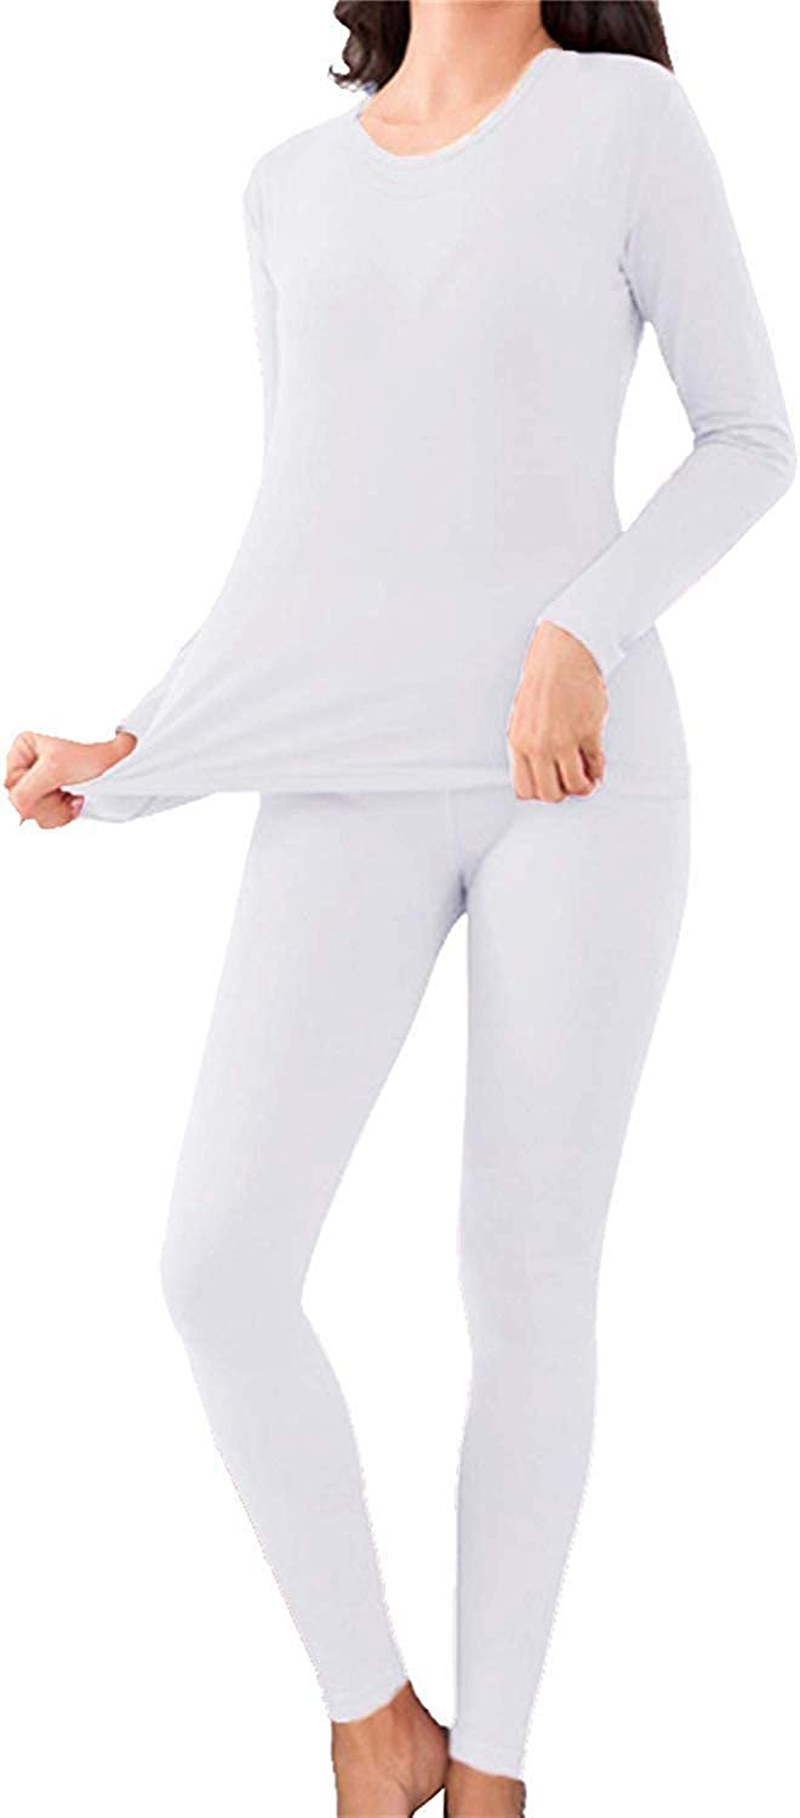 Artfish Women's Ultra Soft Thermal Underwear Long Johns Set with Fleece Lined